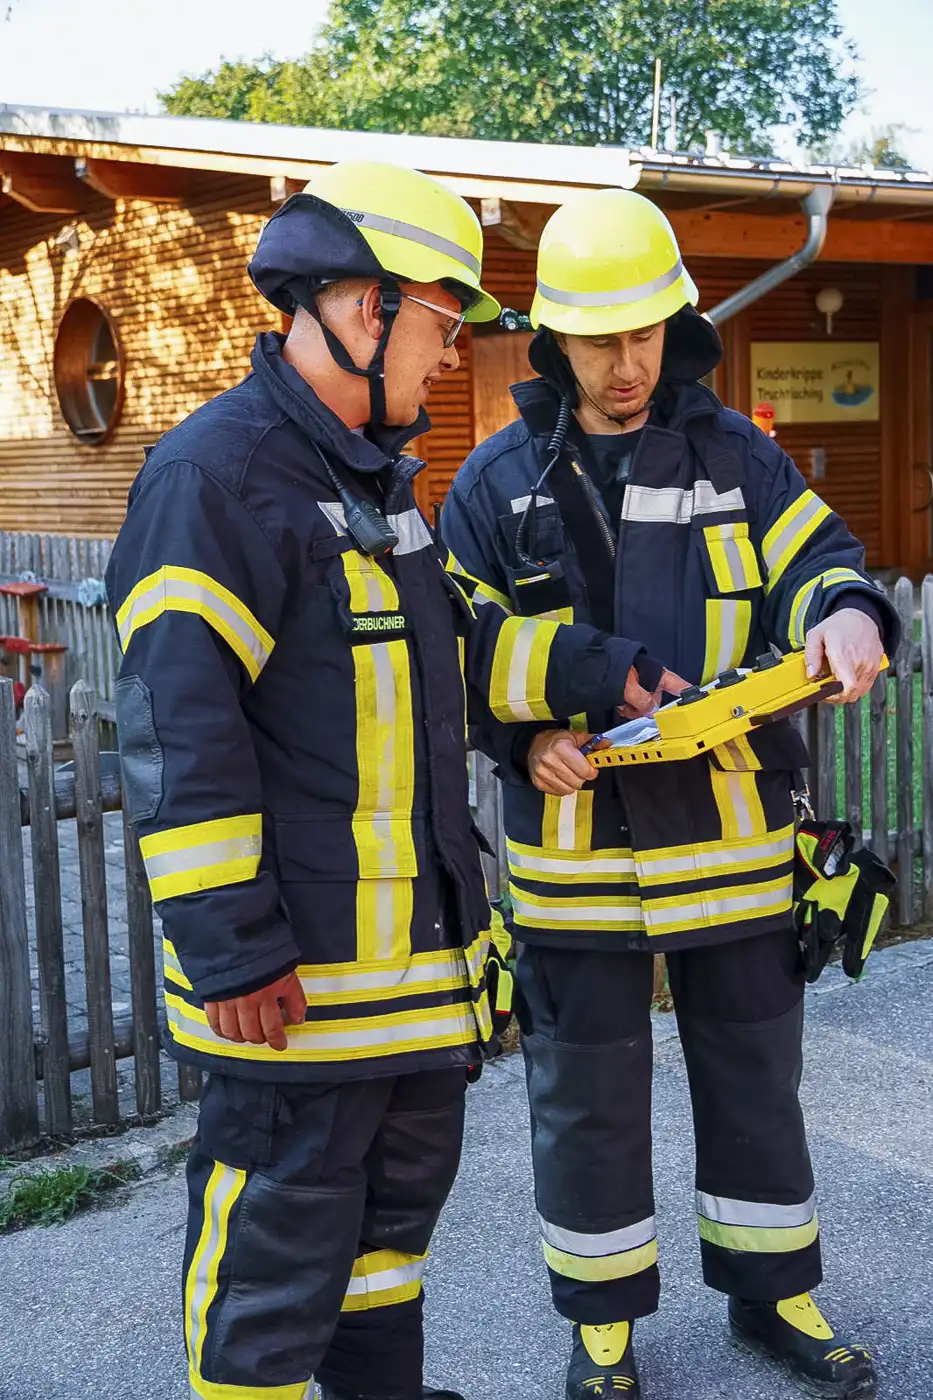 (c) Feuerwehr-truchtlaching.de